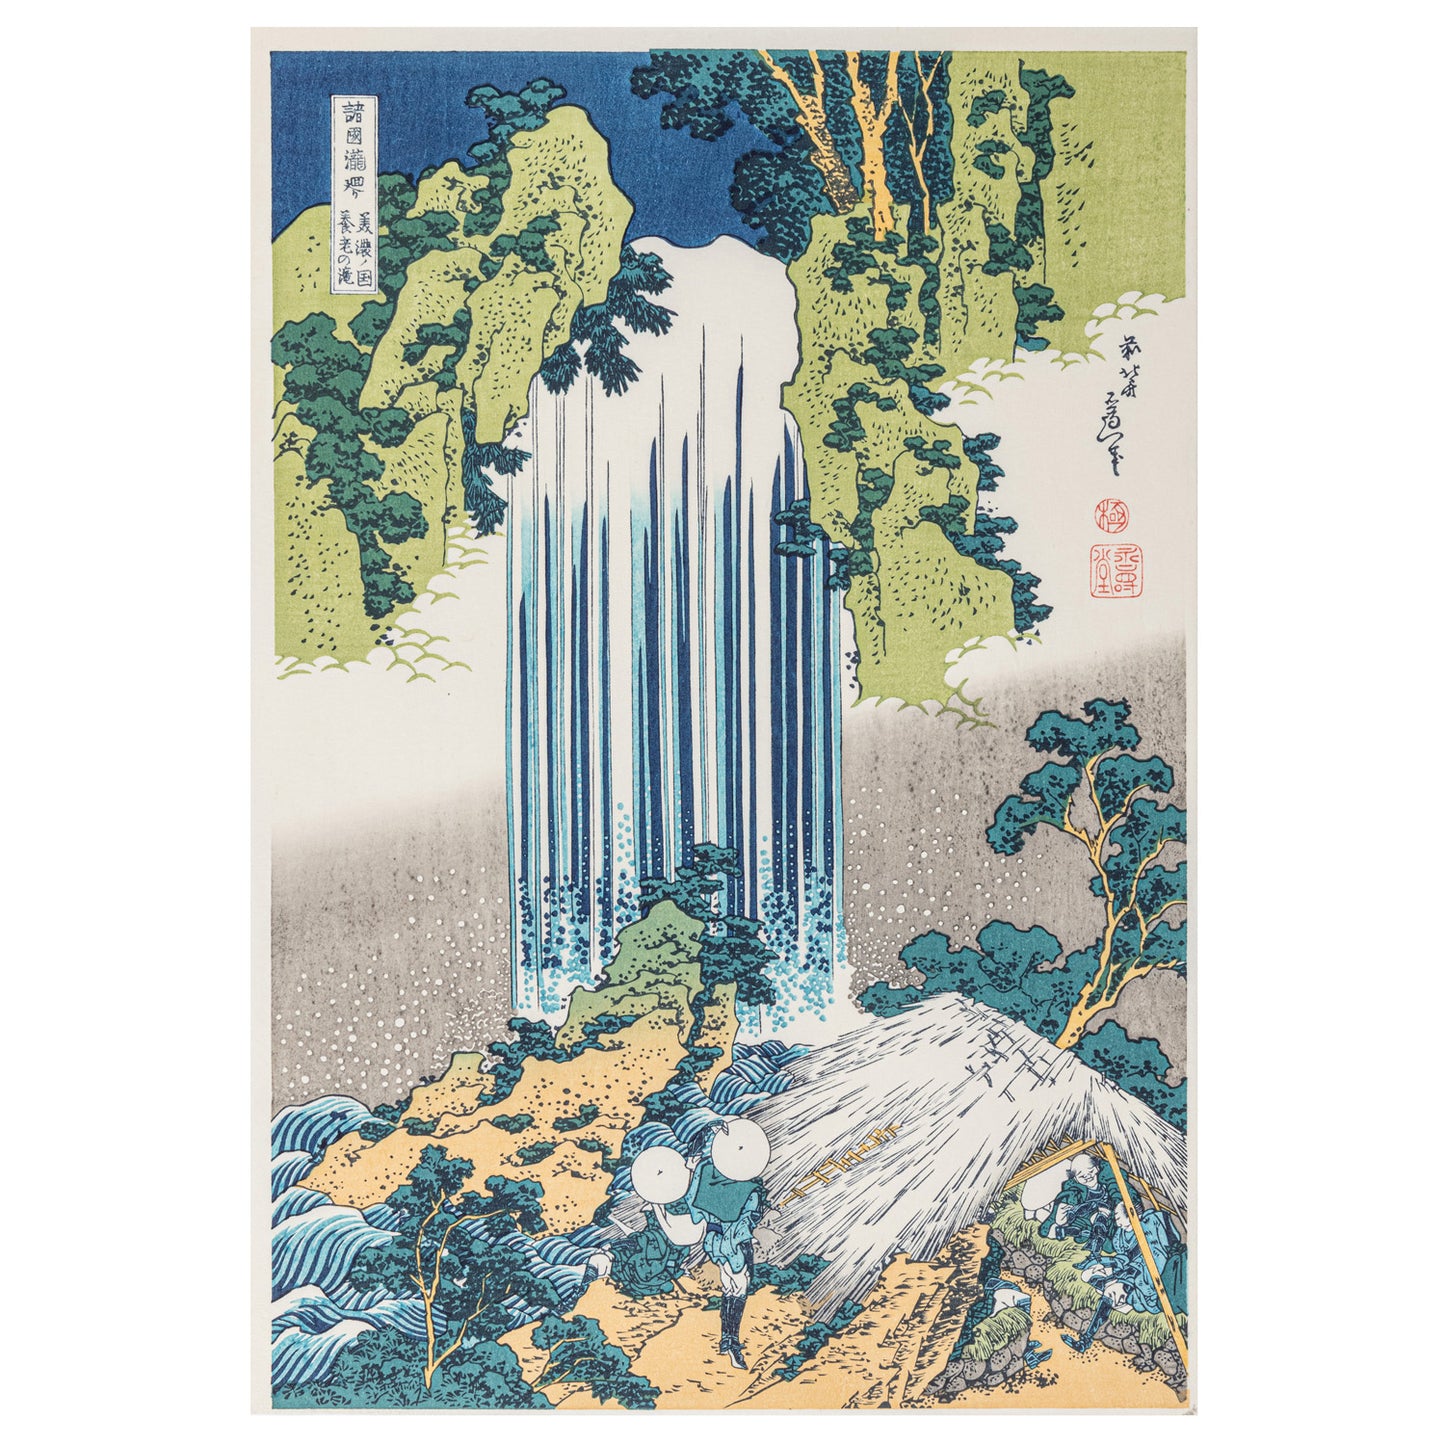 Yoro no Taki Waterfalls in Mino Woodblock Print